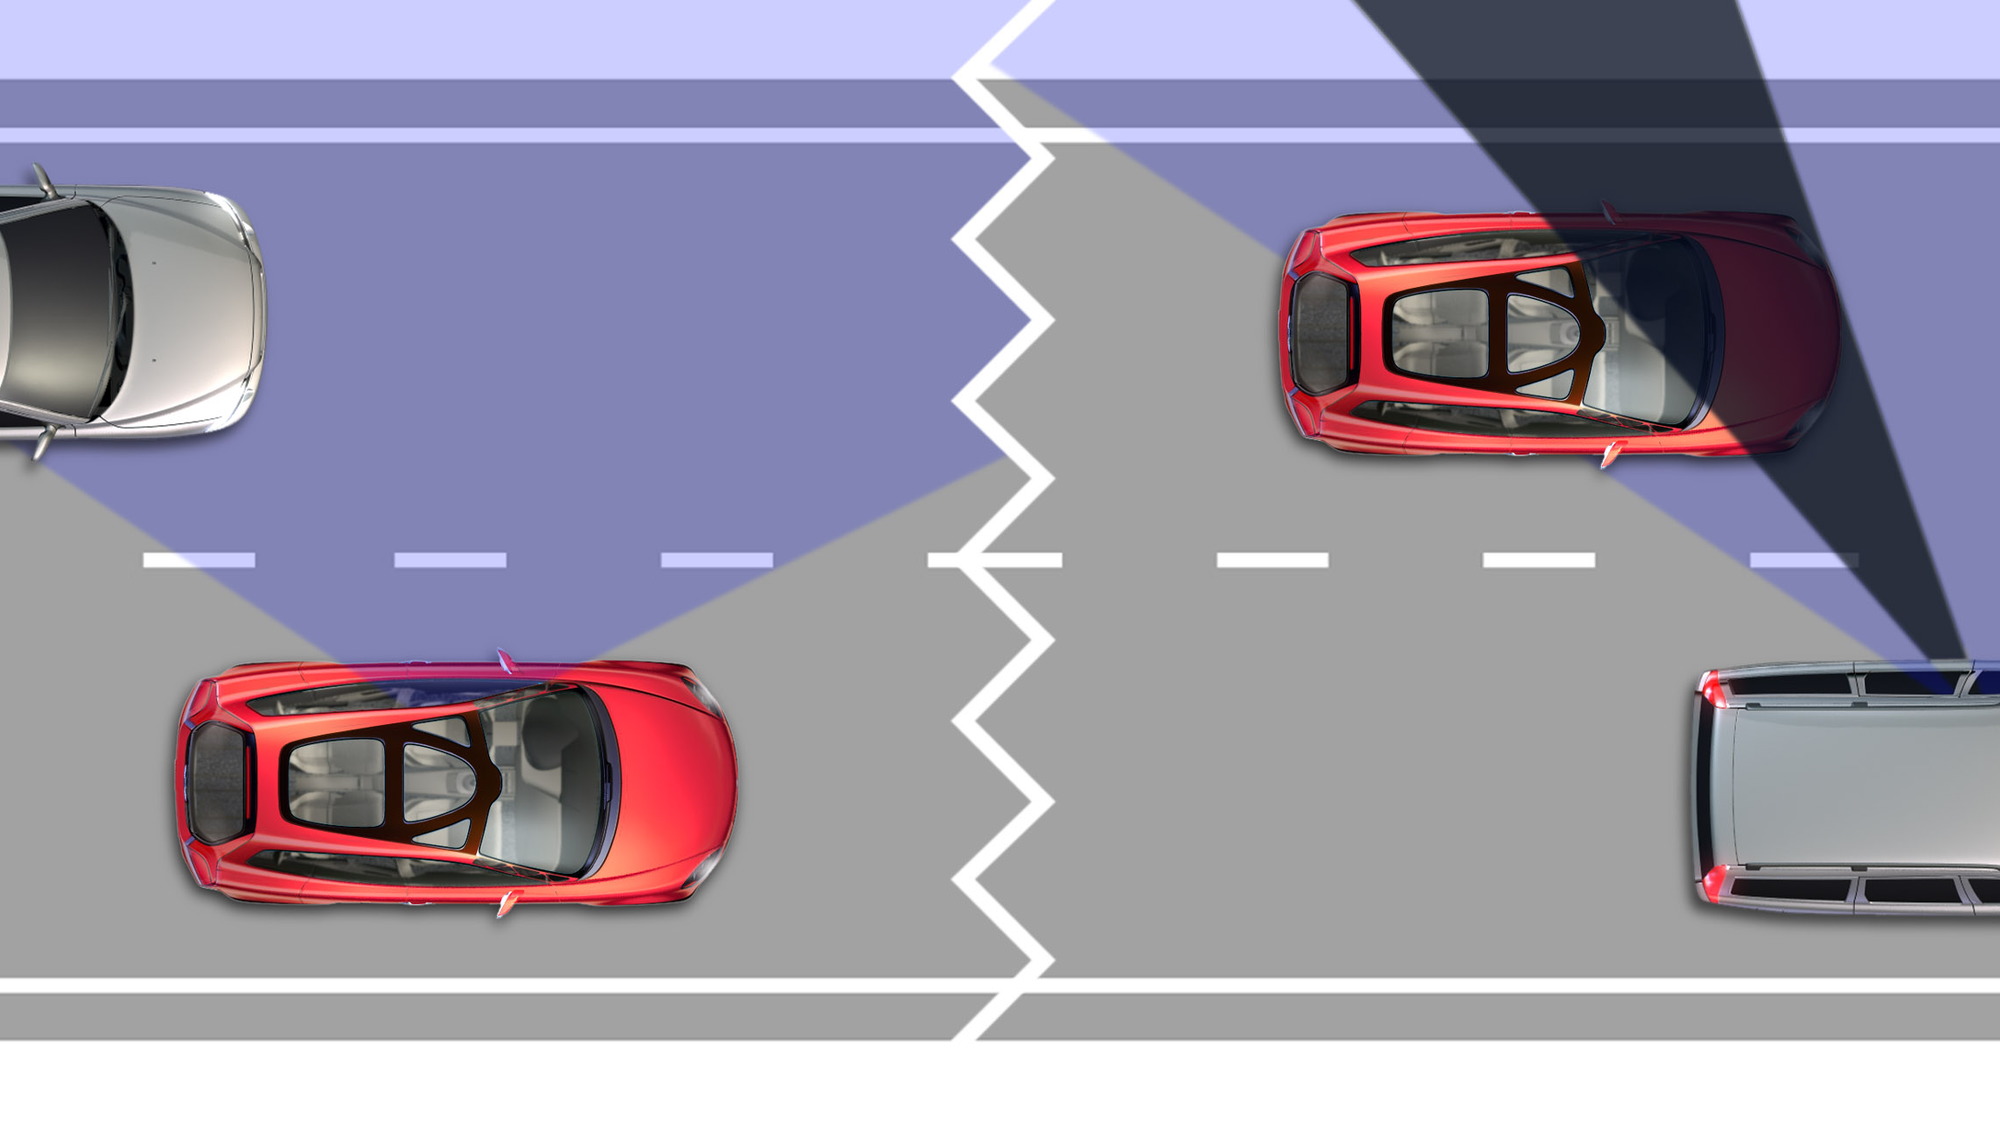 Volvo Safety Concept Car